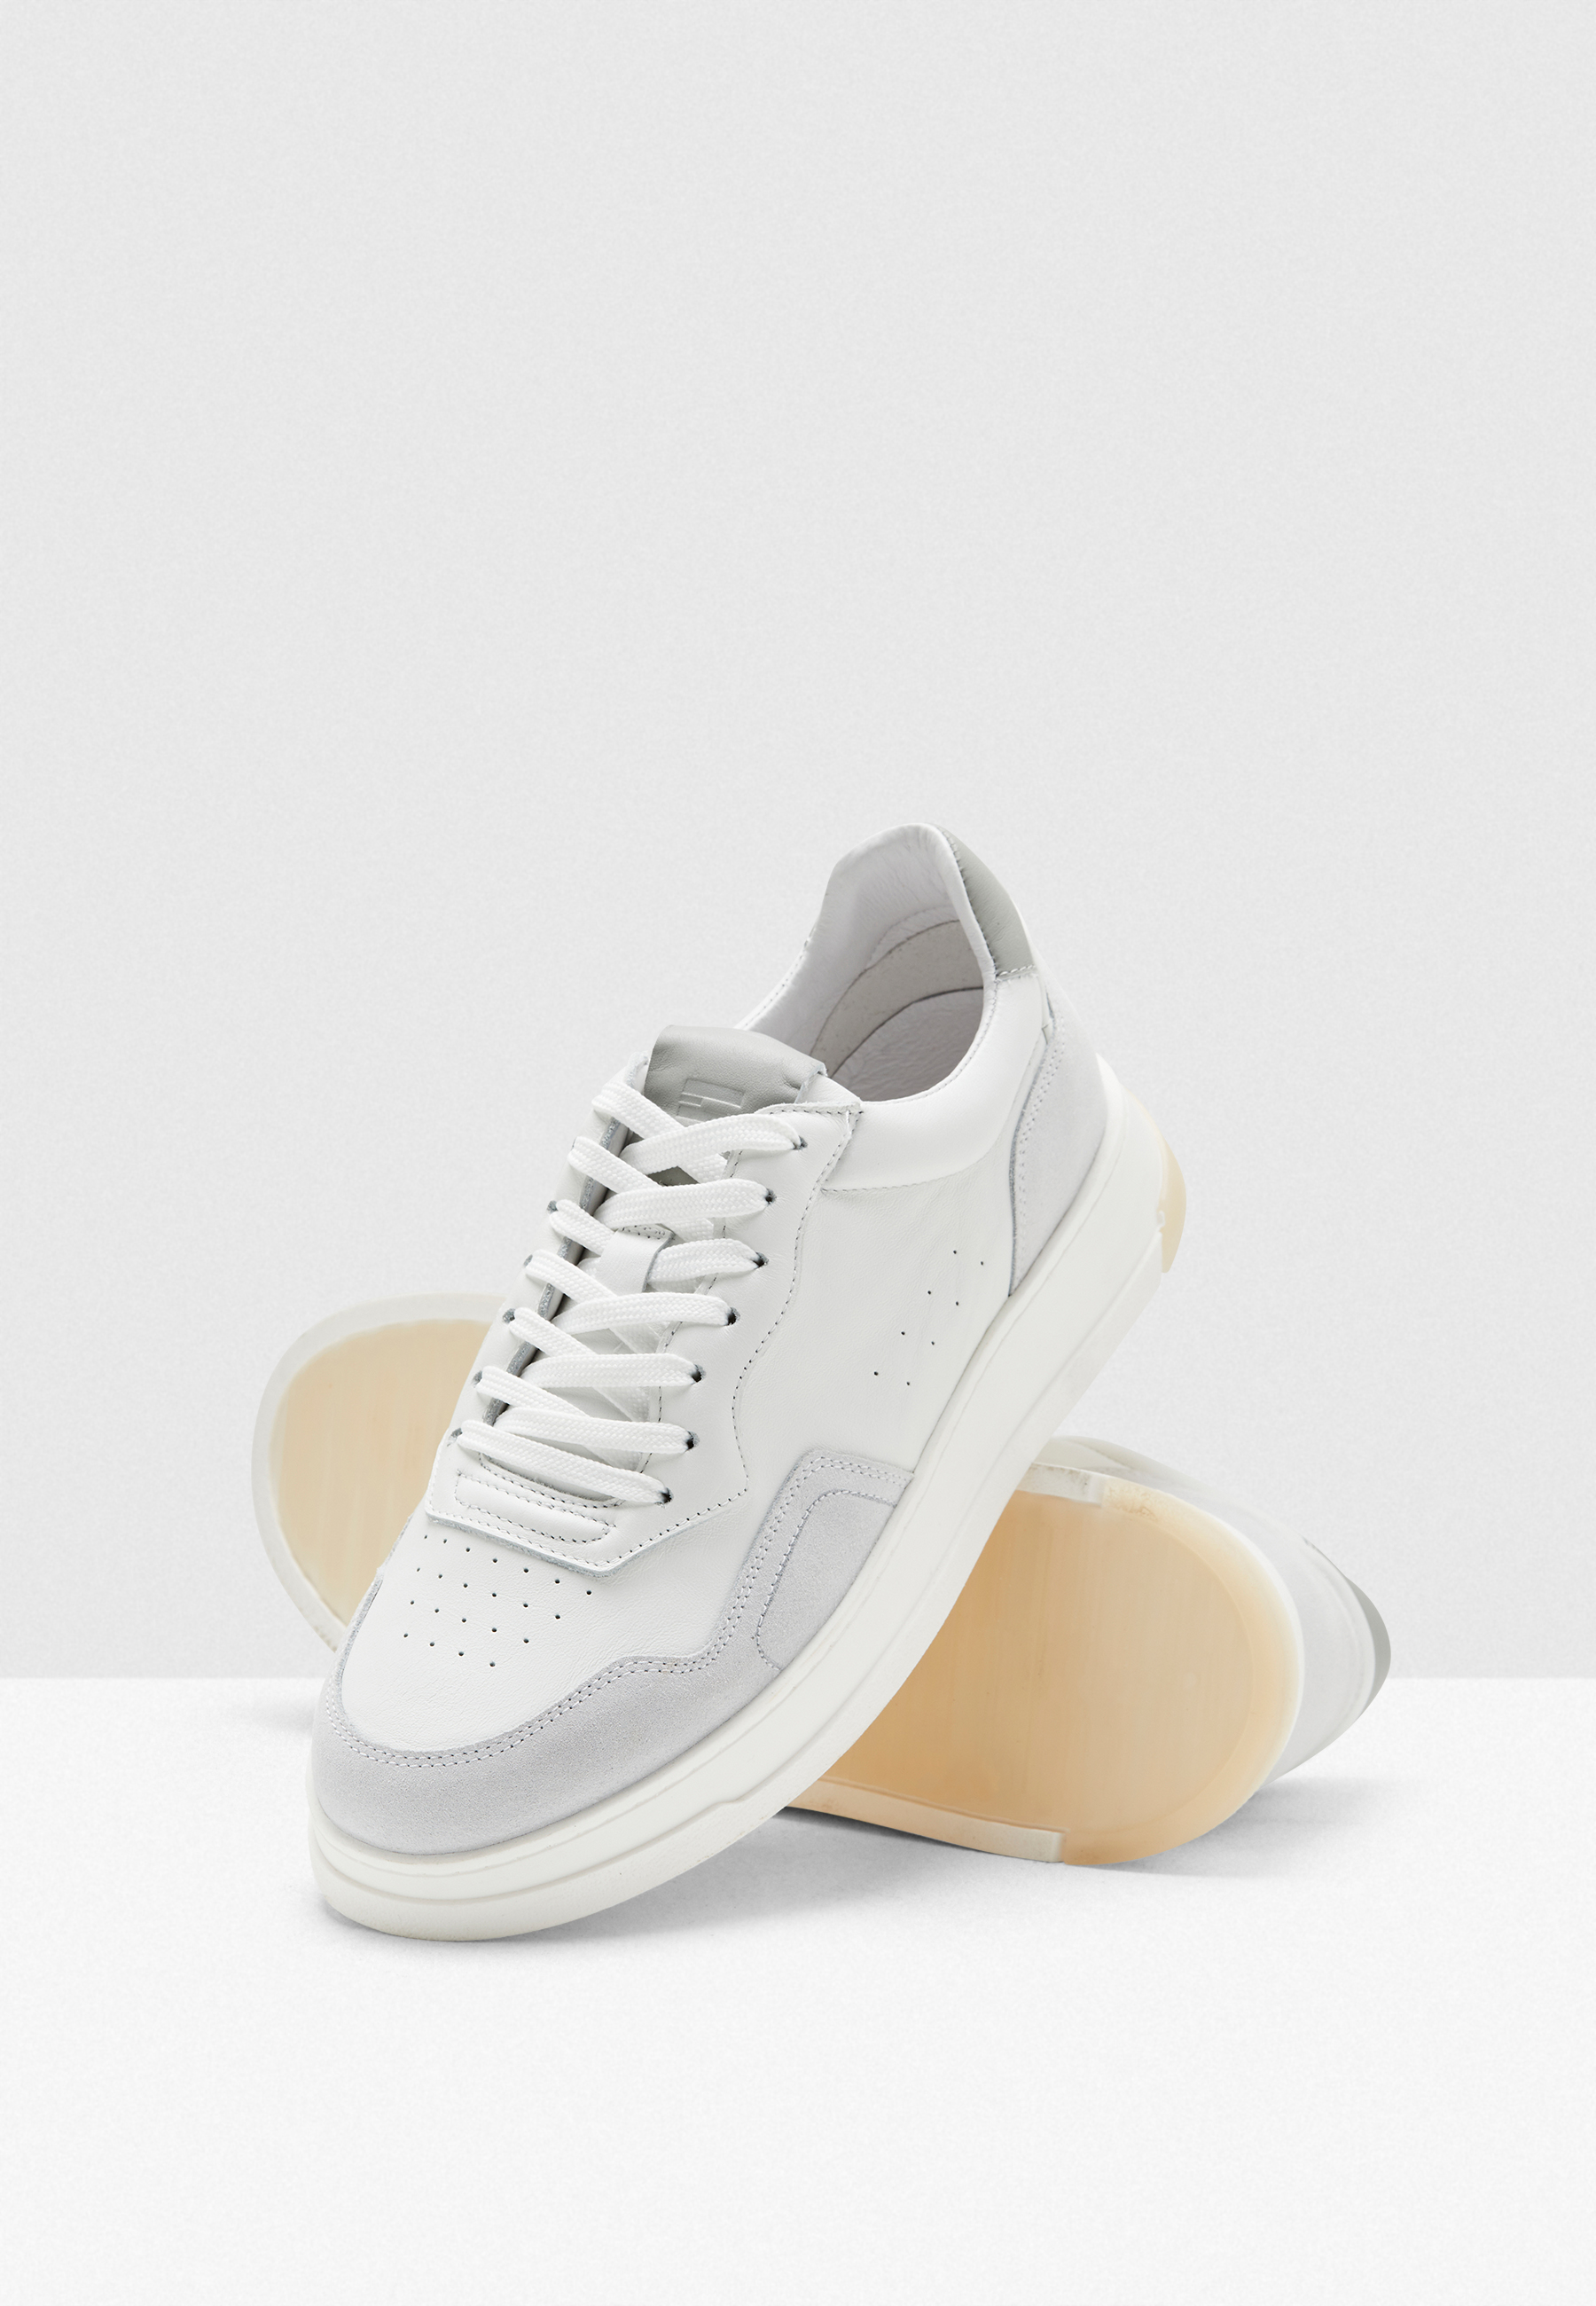 CINQUE 52145-10 CININO Herren Leder Sneaker grau/weiß